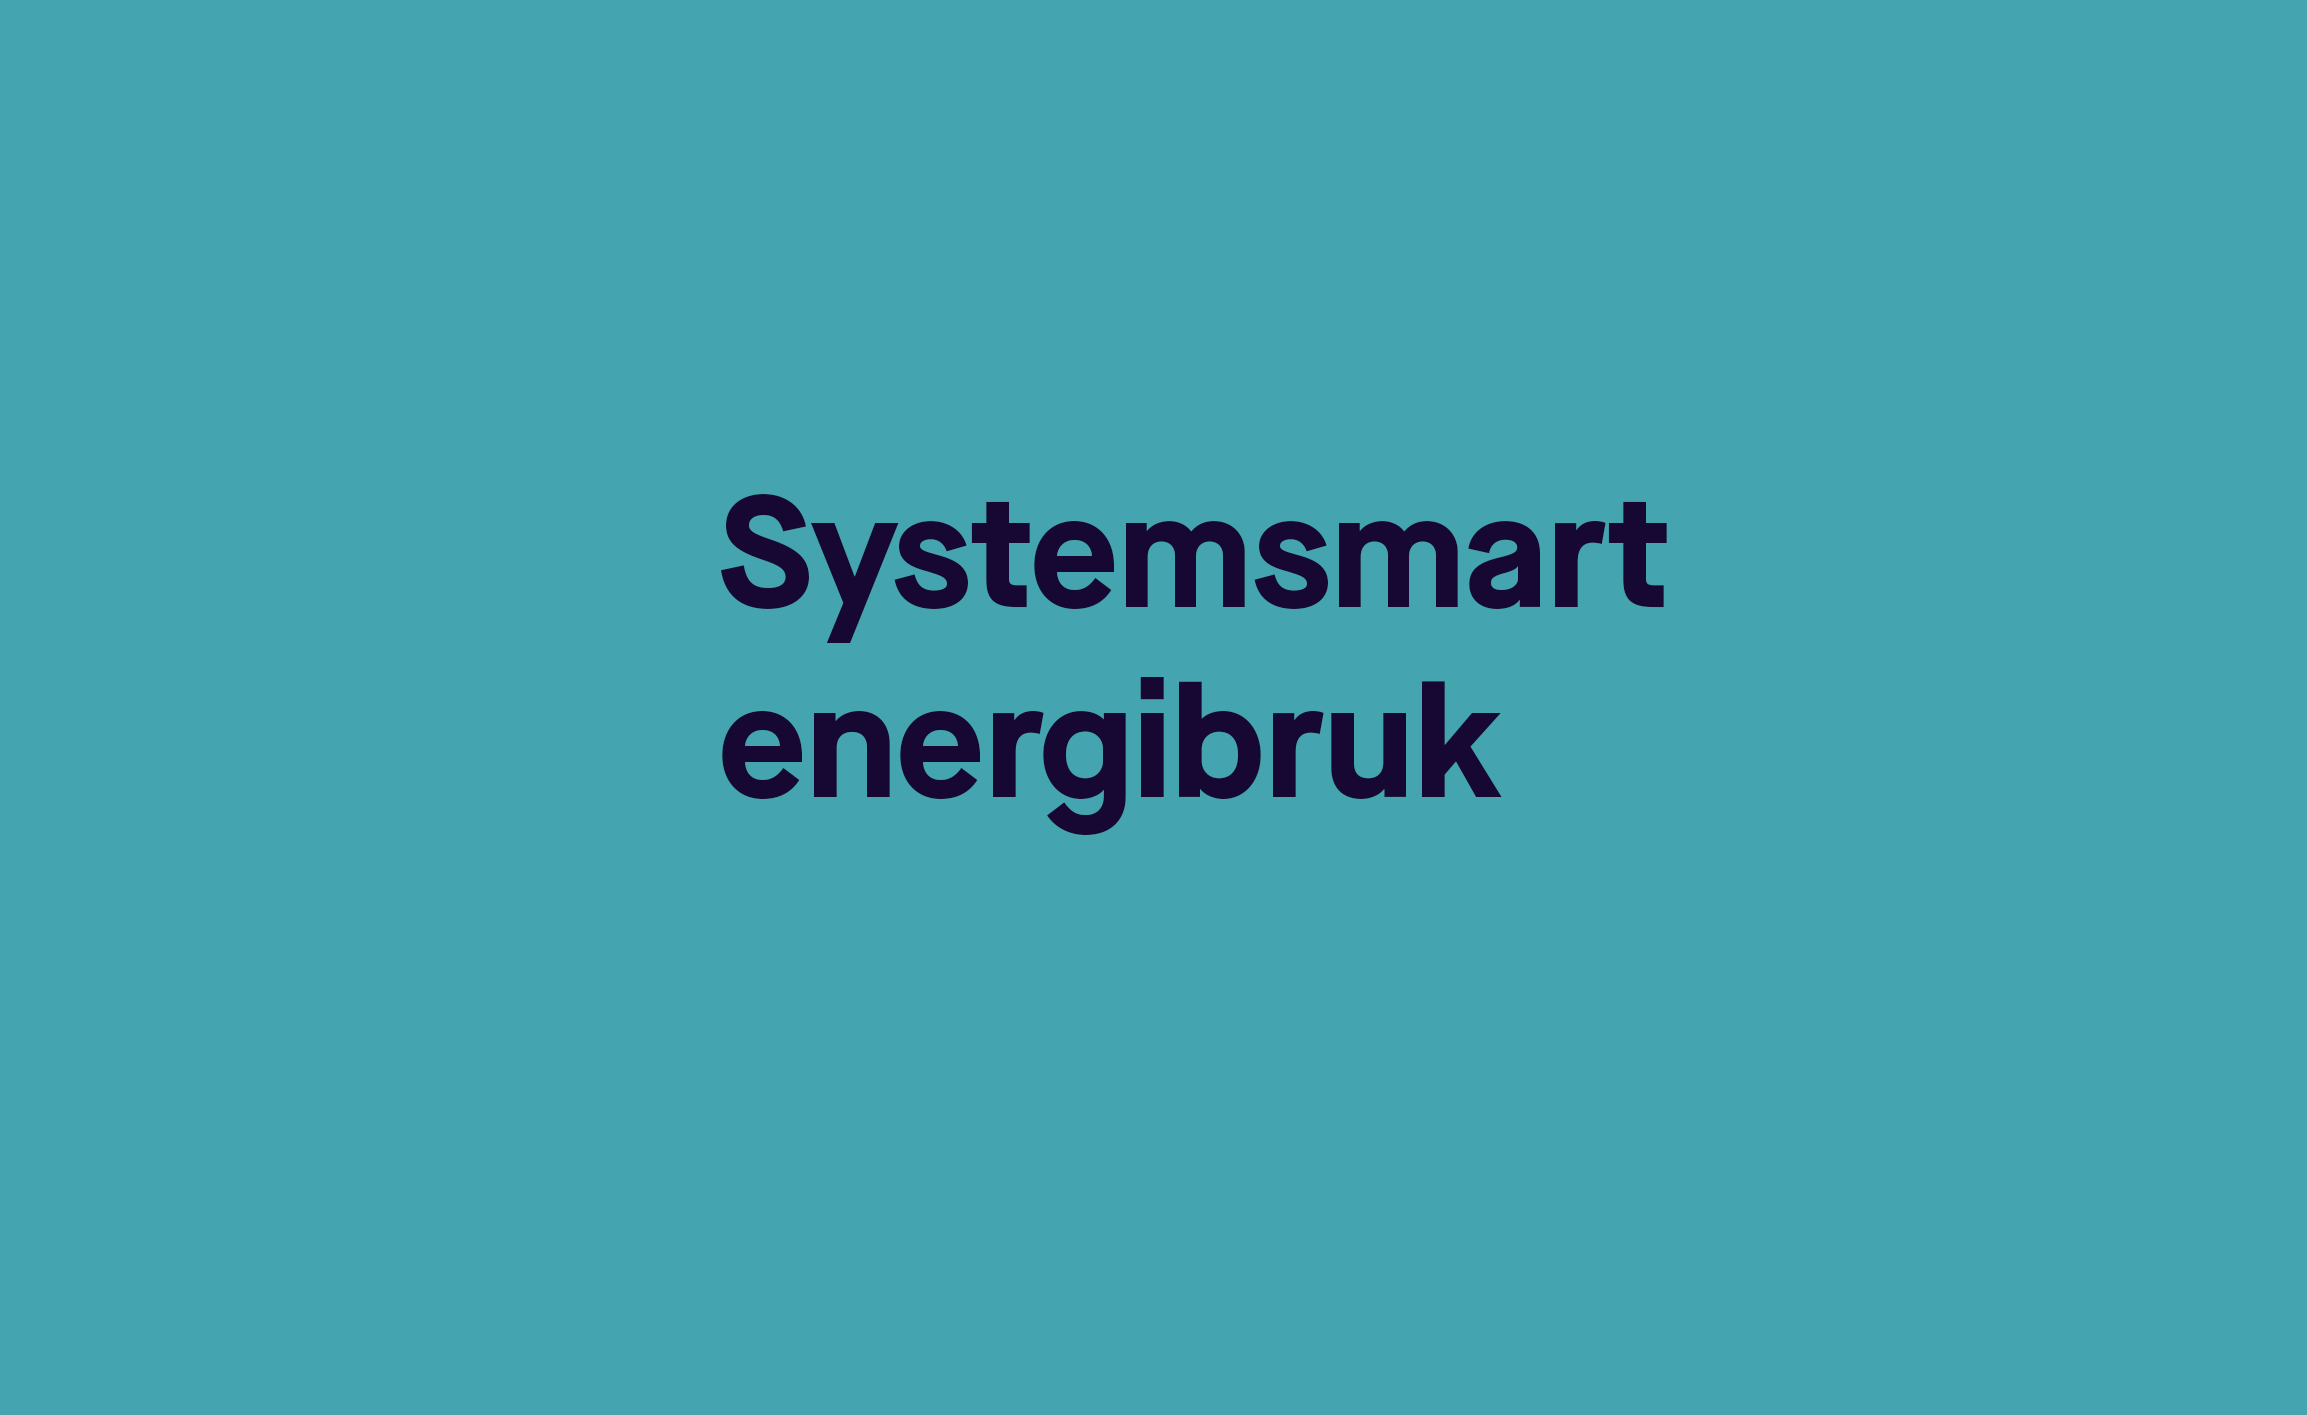 Systemsmart energibruk: Fremtiden er nokså elektrisk